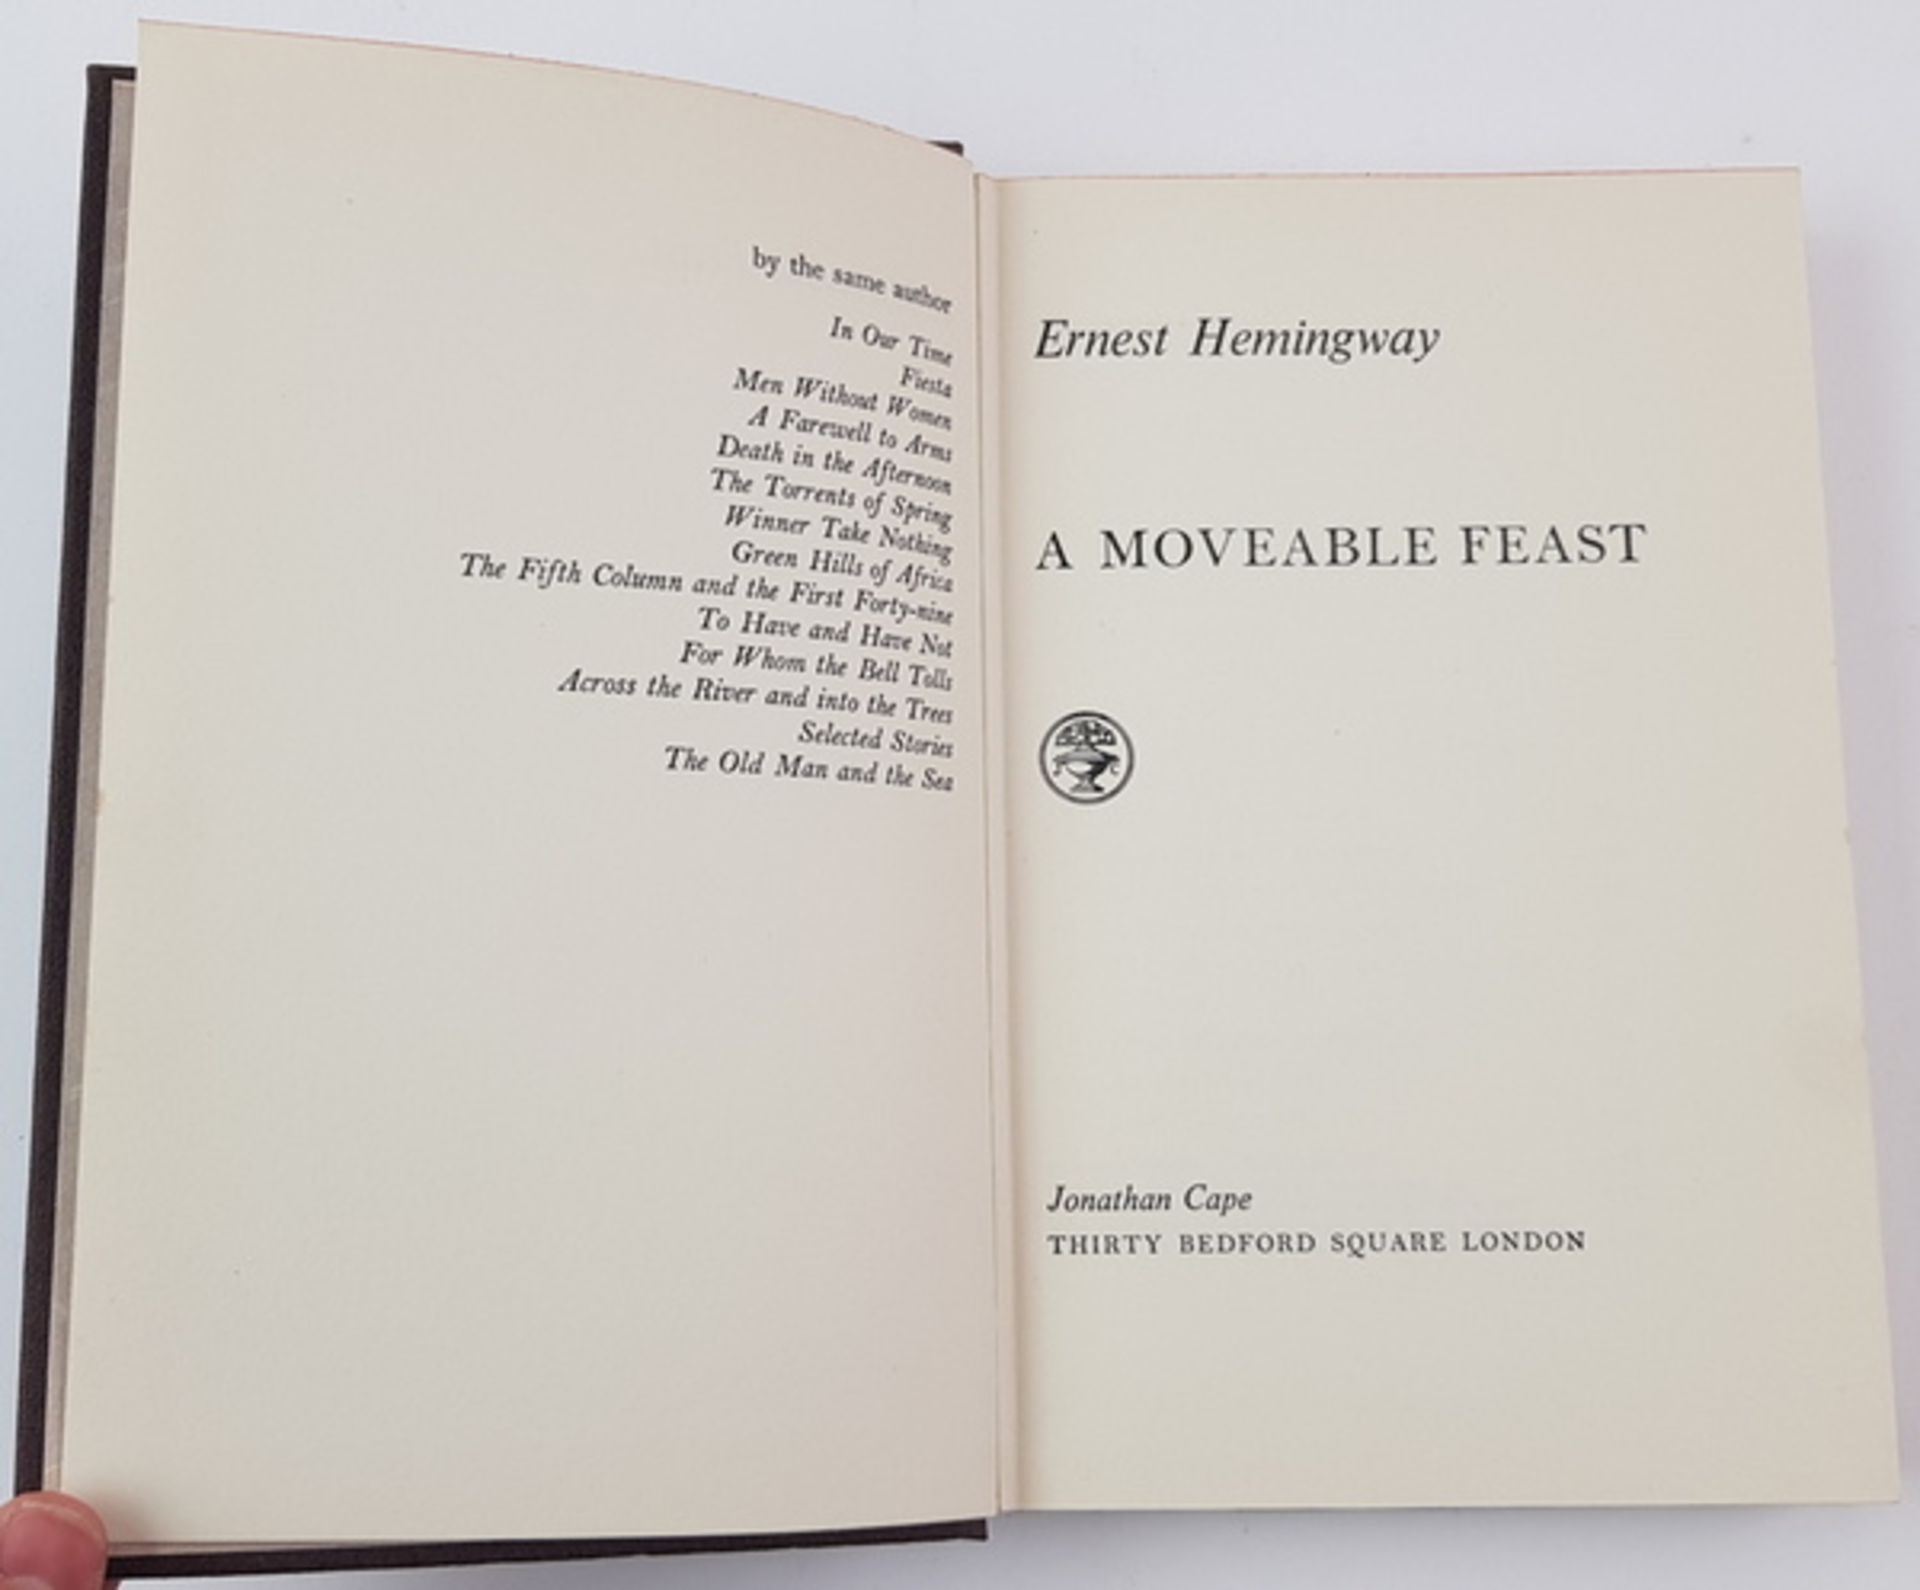 (Boeken) (Literatuur) - Ernest Hemingway - A Moveable Feast (1e druk)Ernest Hemingway - A Moveable